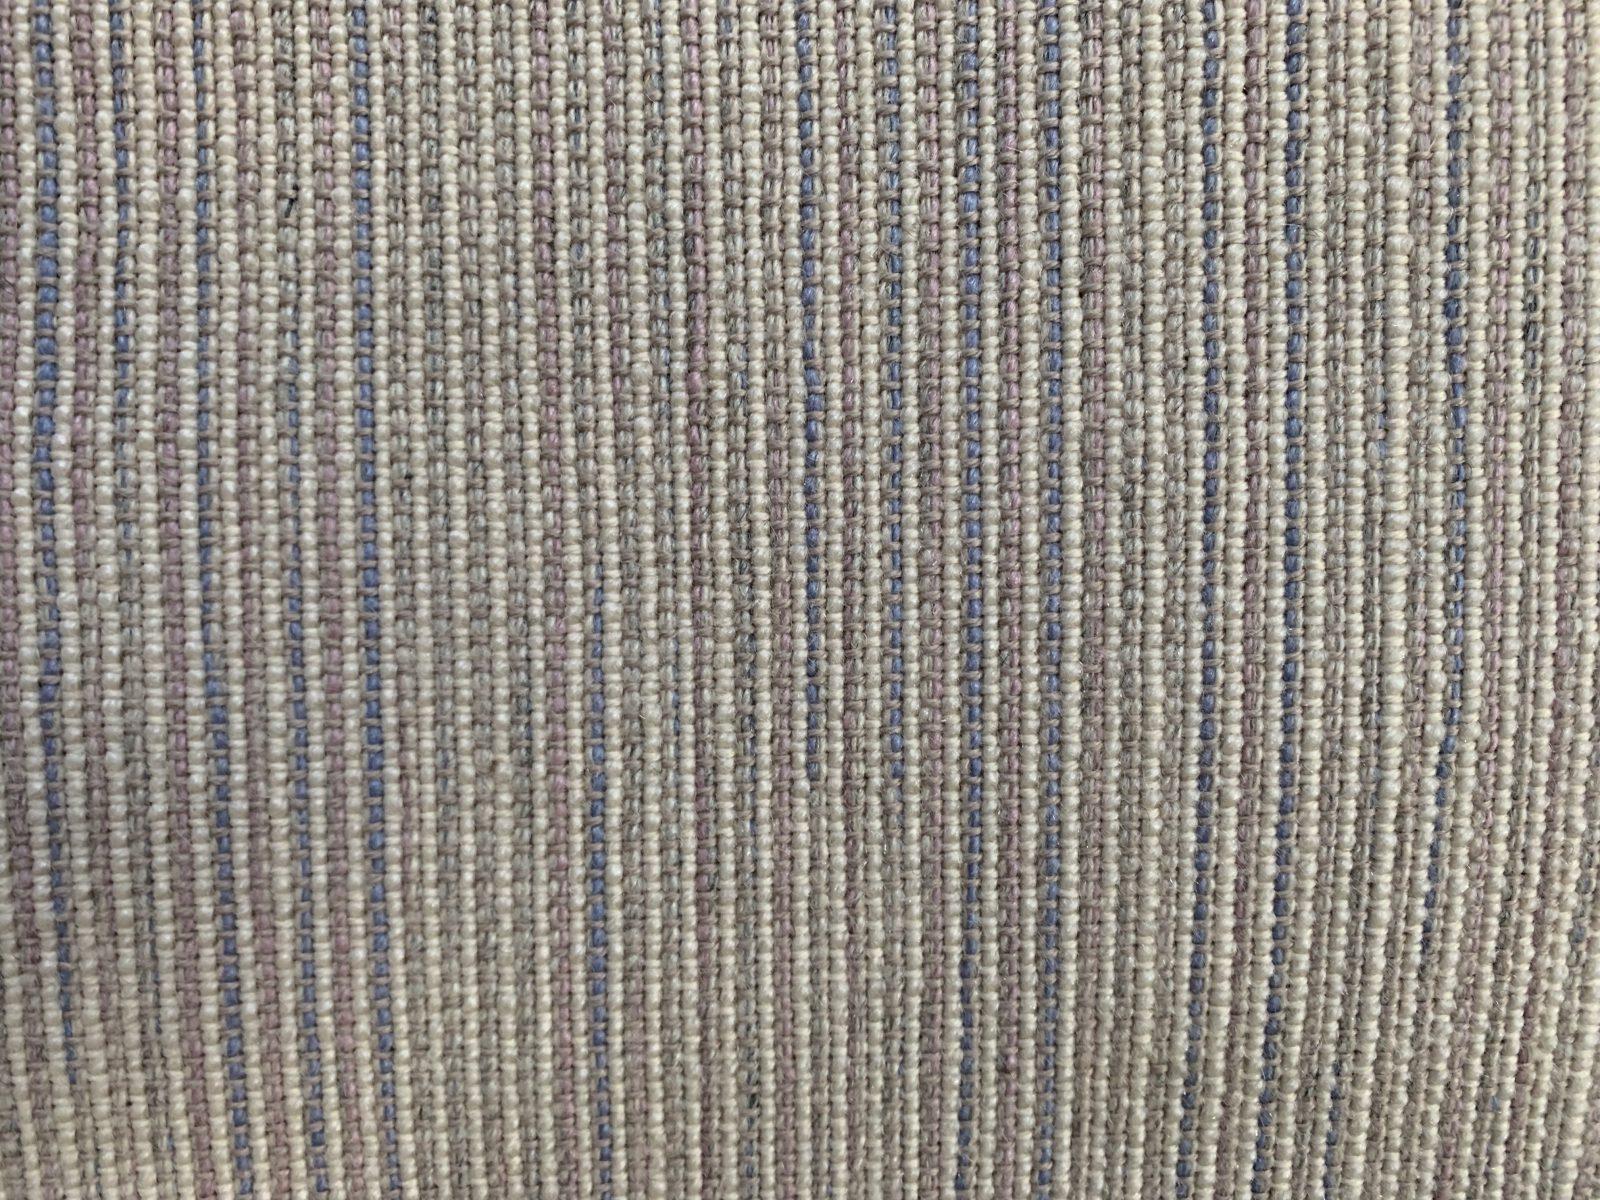 B&B Italia “Charles” L-Shape Sectional Sofa in Stripe Wool For Sale 7